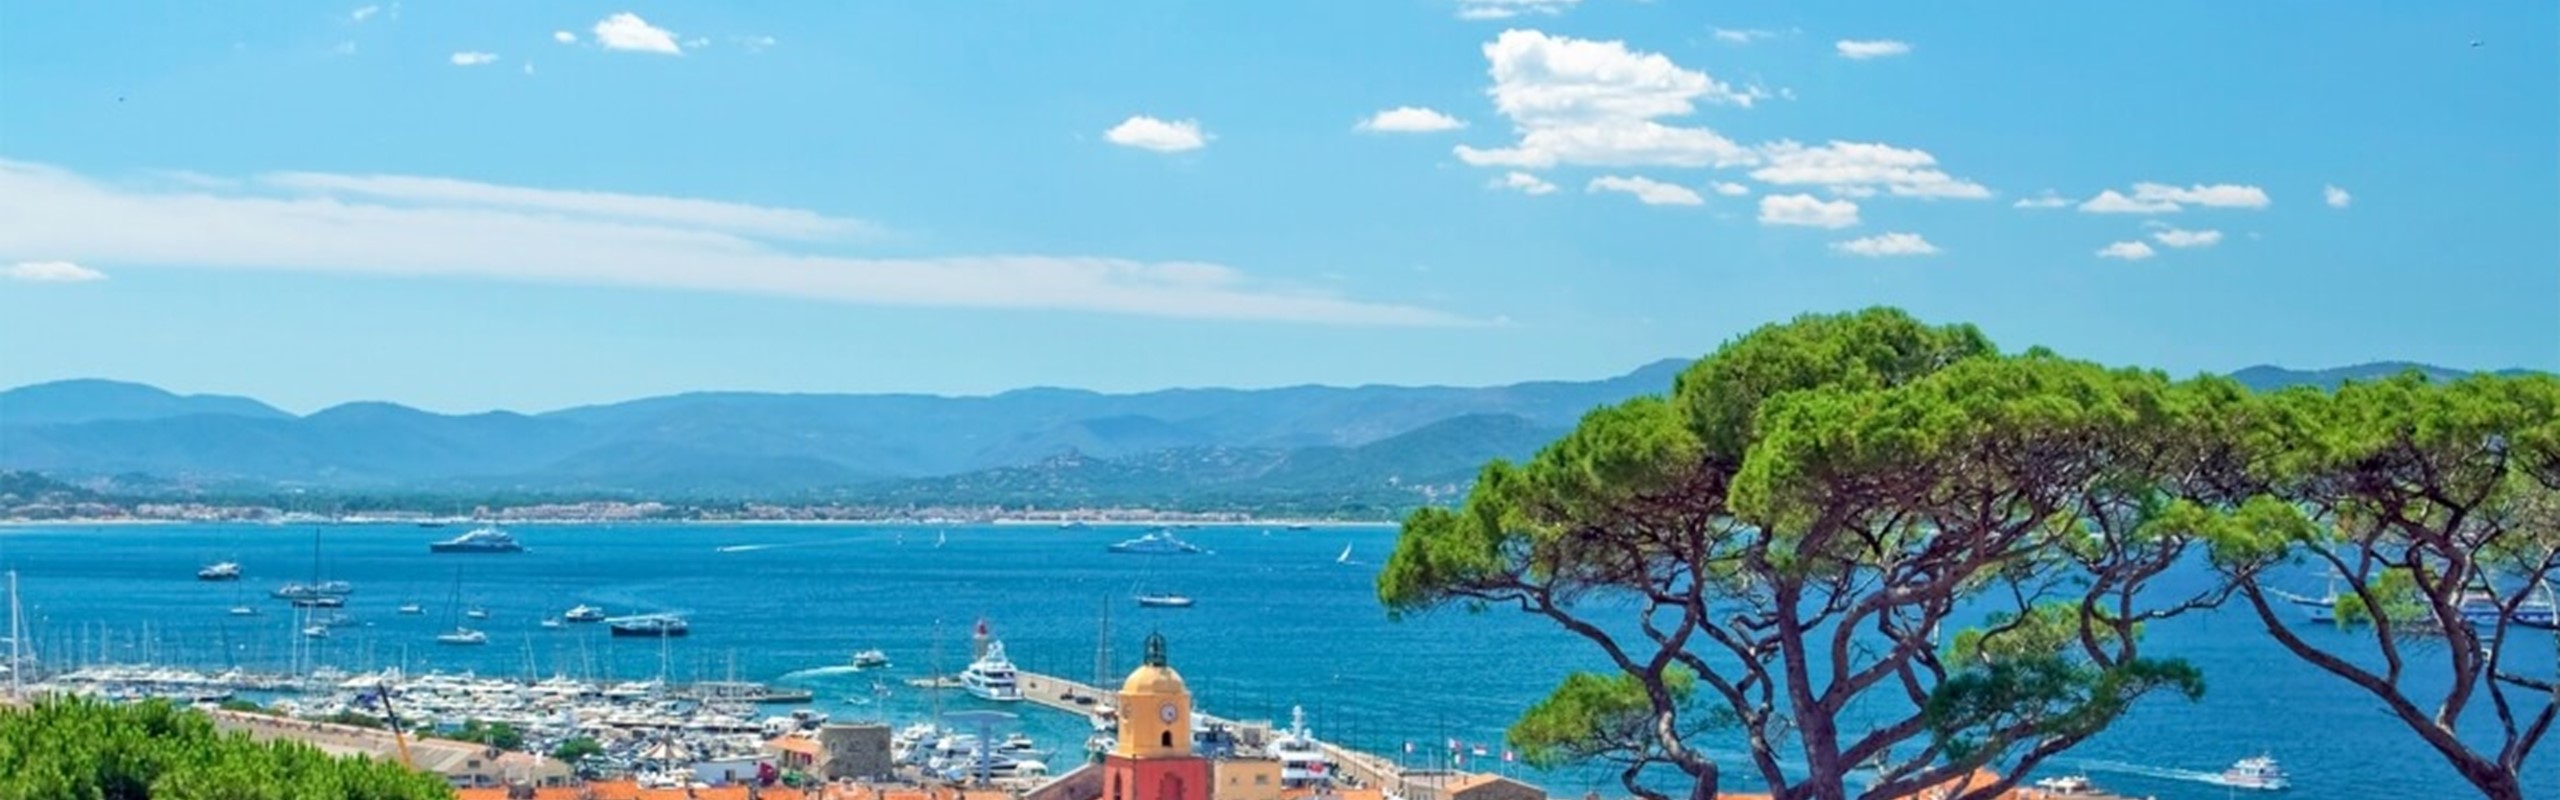 Saint-Tropez Private Beaches: Family-friendly, Festive - Excellence